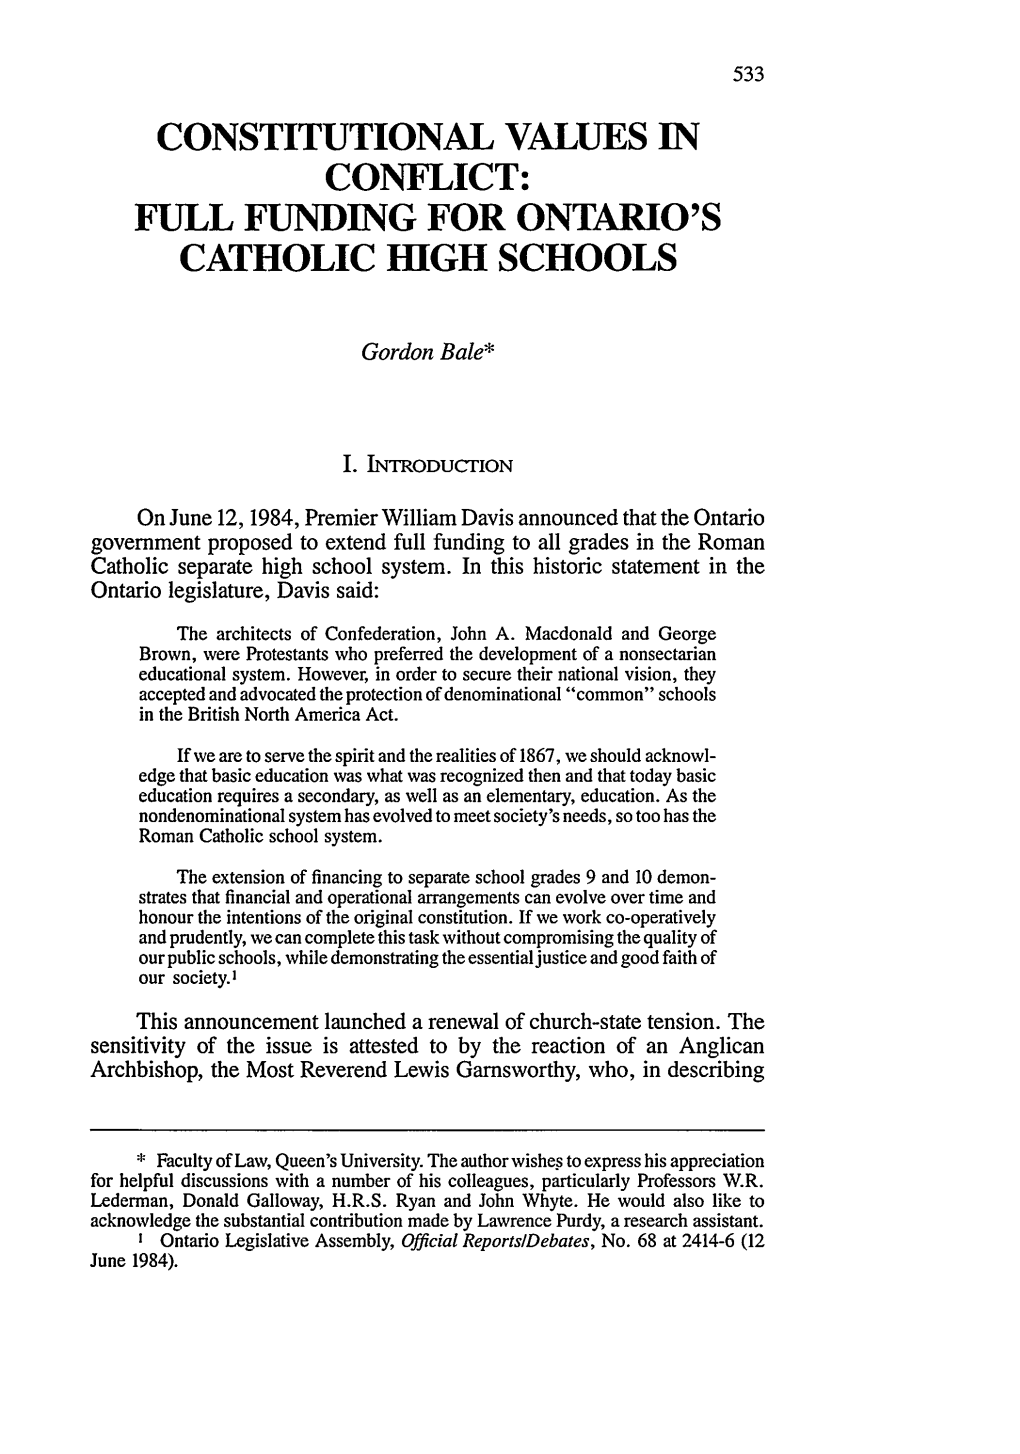 Constitutional Values in Conflict: Full Funding for Ontario's Catholic High Schools